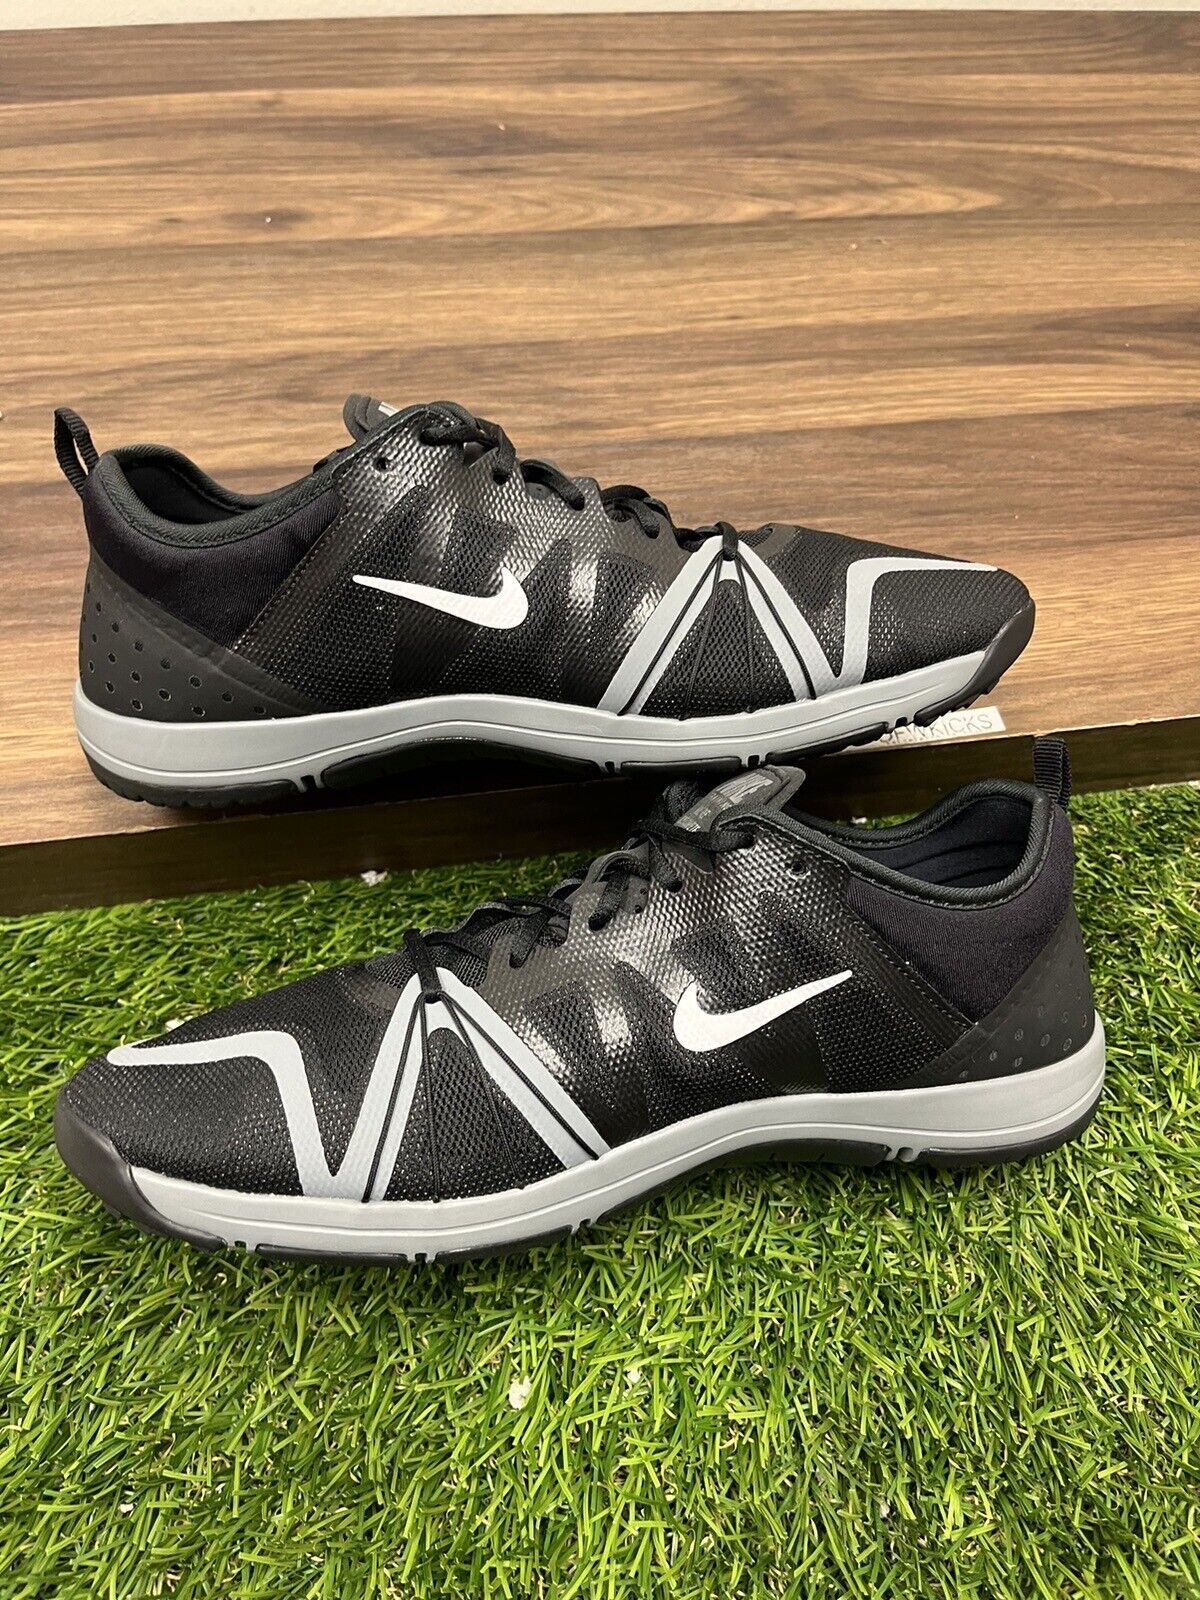 Nike Free Cross Compete Women's Training Shoe black sneakers tennis  size 8.5